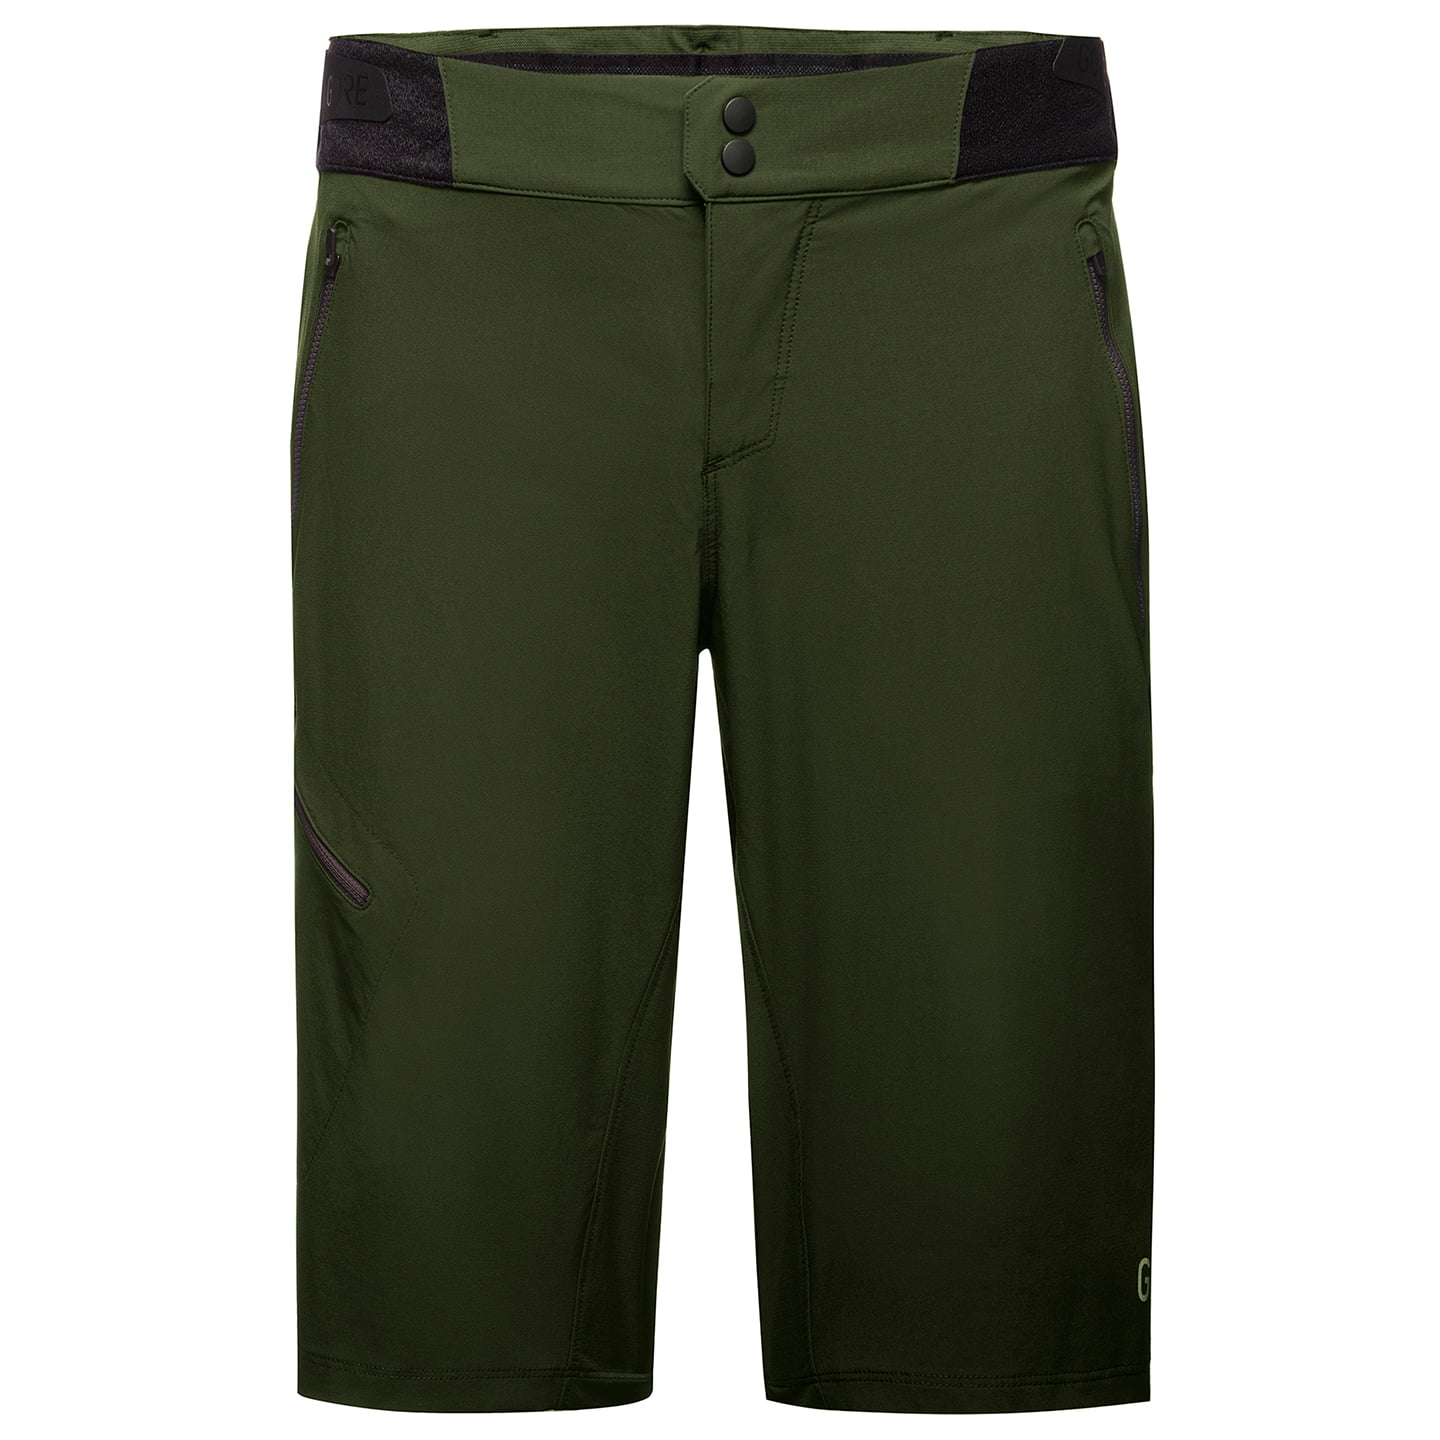 GORE WEAR C5 w/o Pad Bike Shorts, for men, size 2XL, MTB shorts, MTB clothing